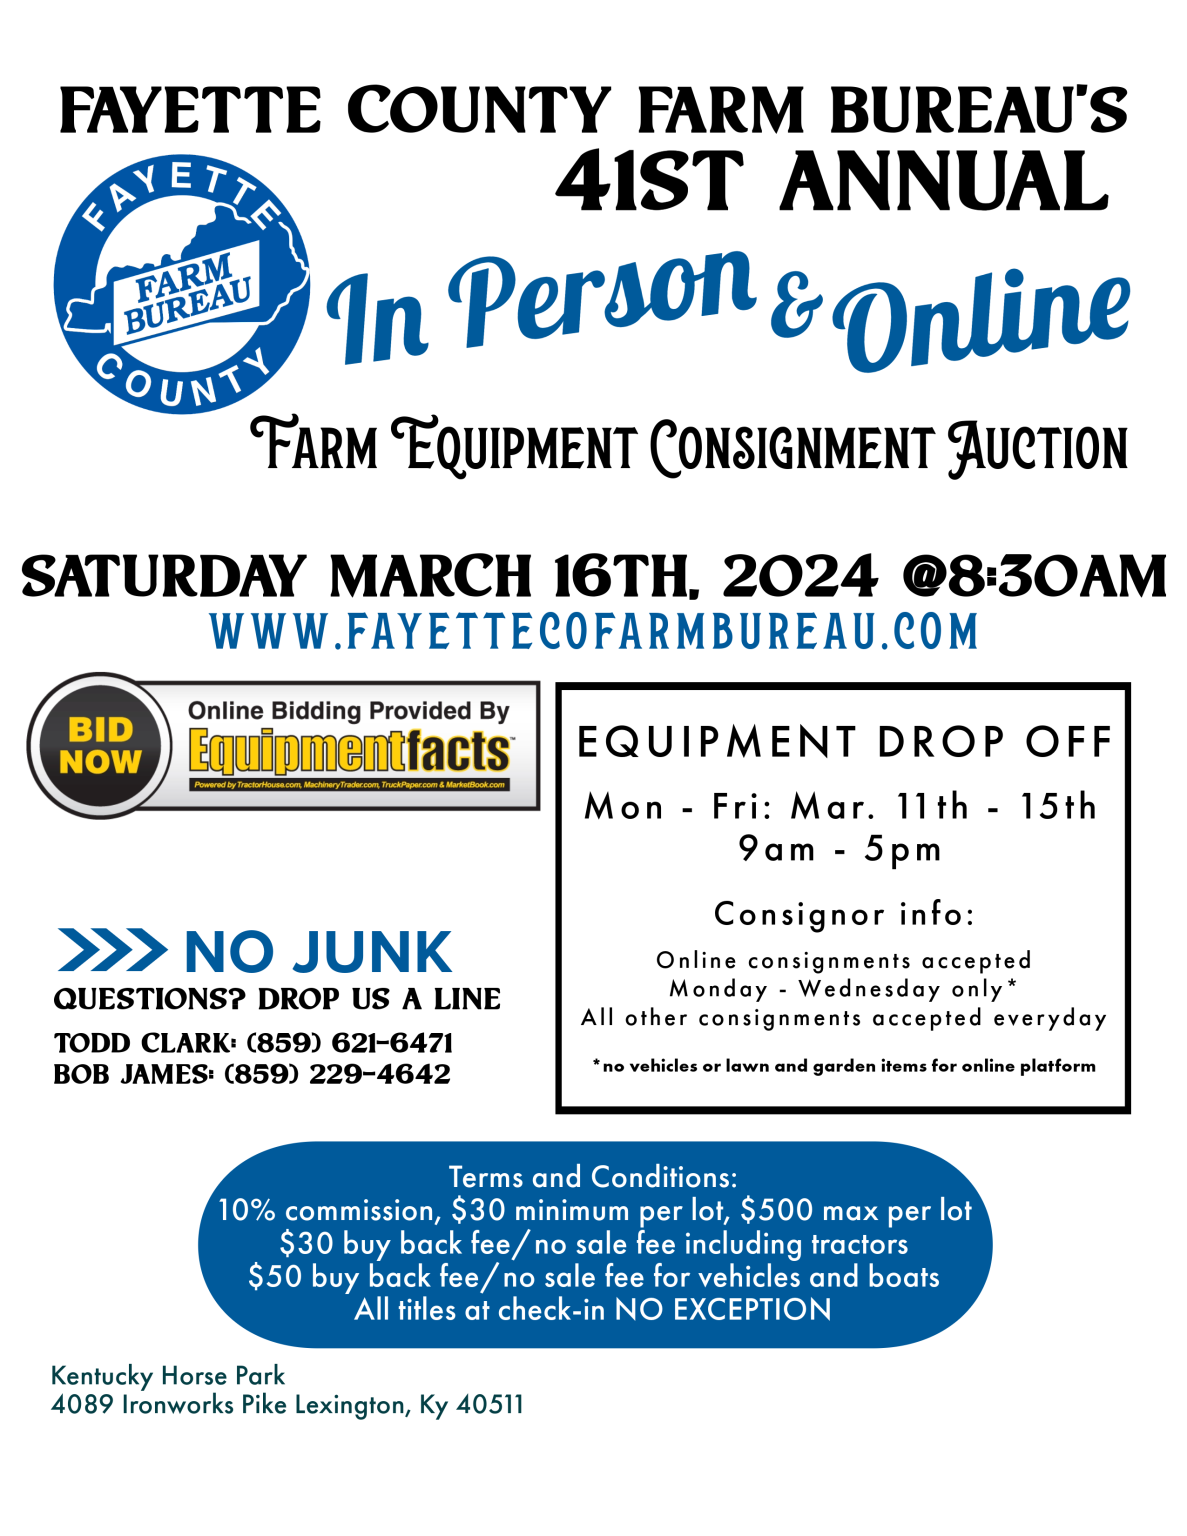 Auction Fayette County Farm Bureau Federation